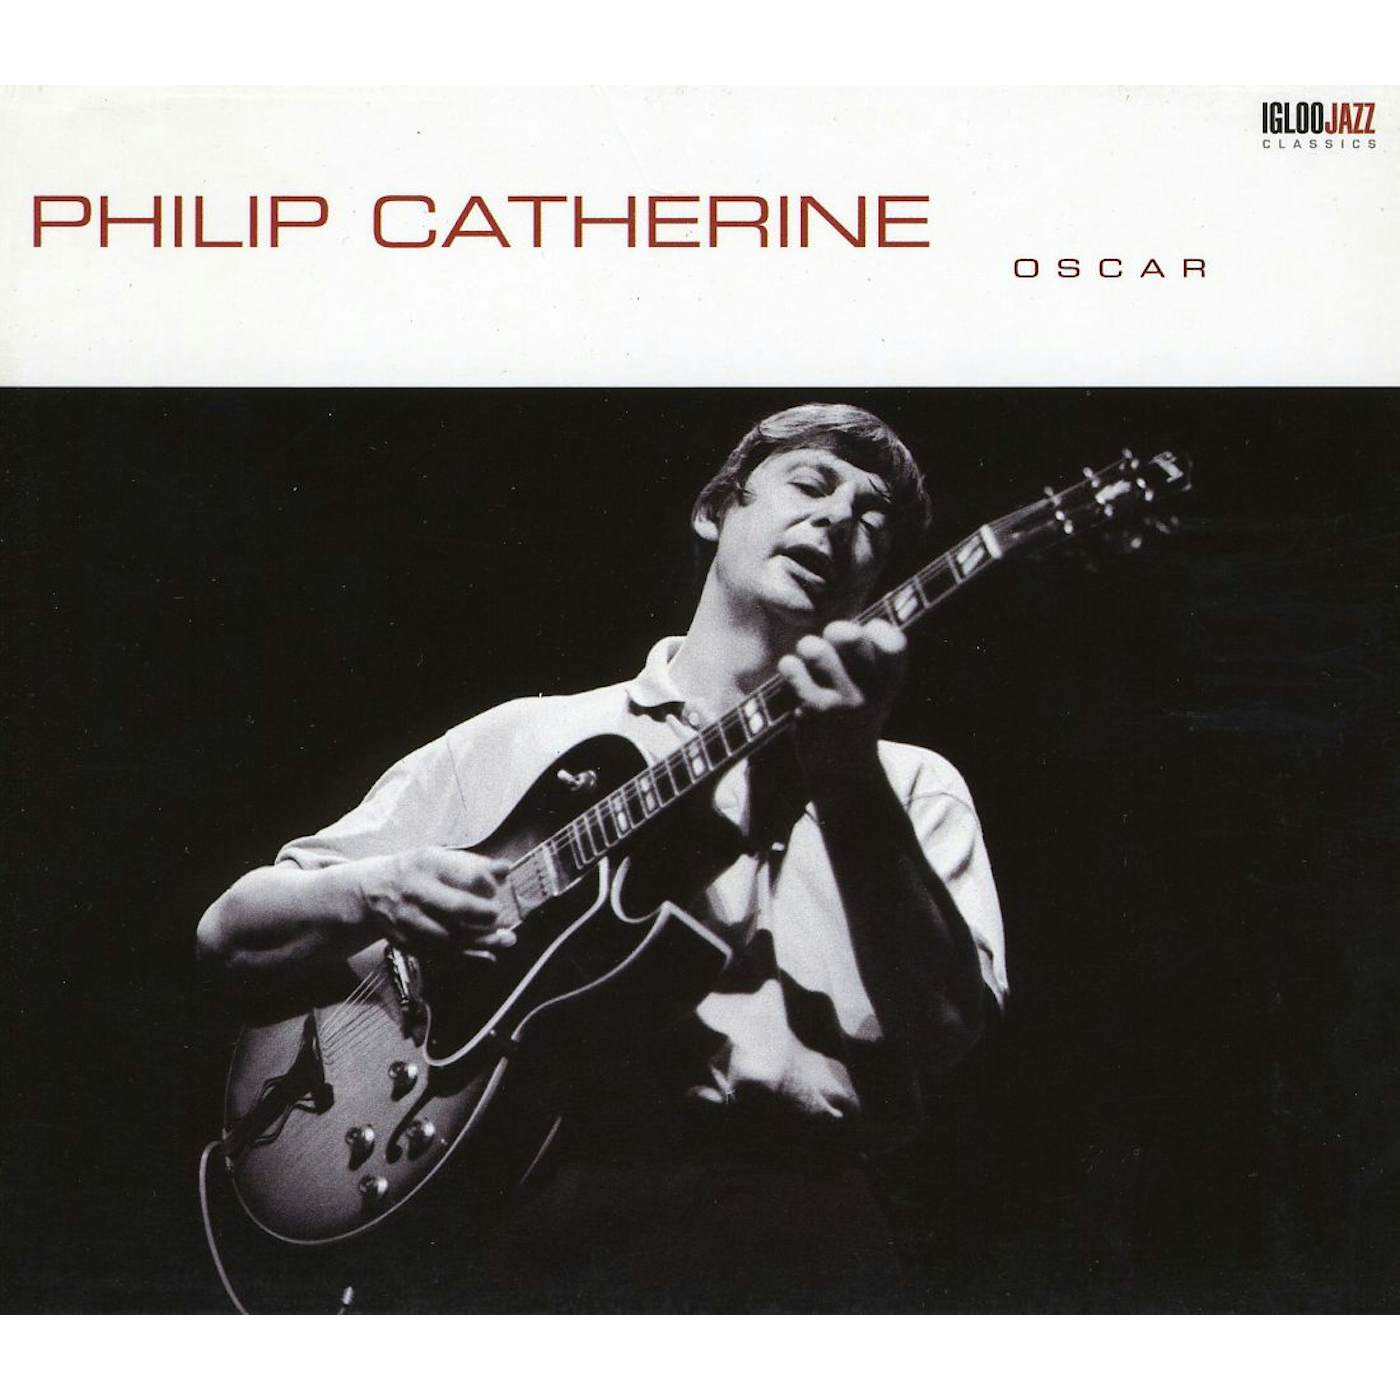 Philip Catherine OSCAR CD